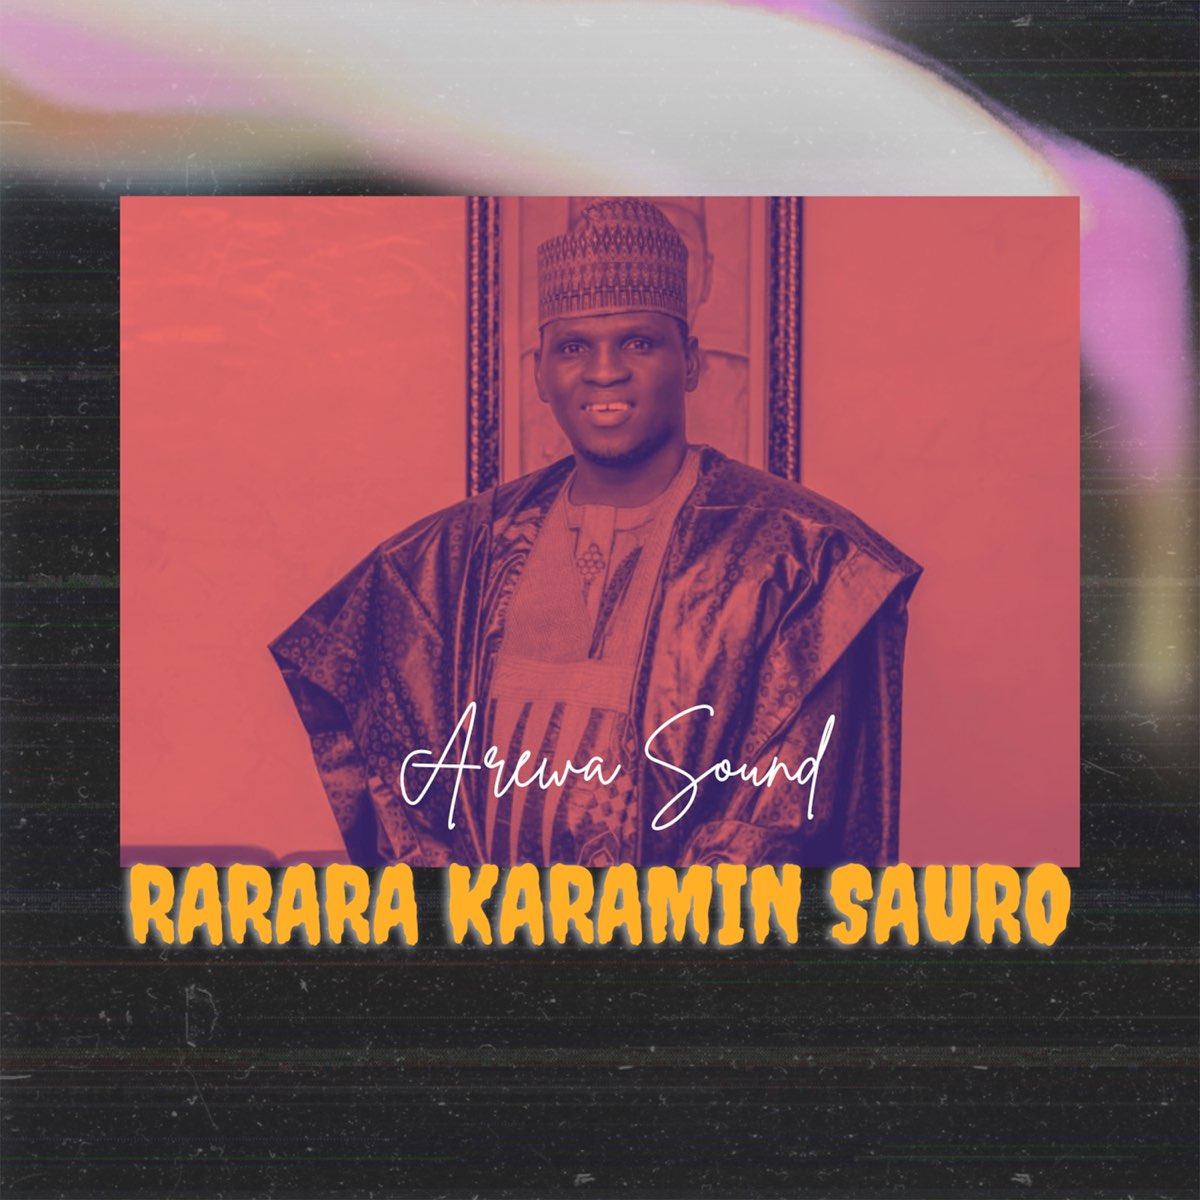 Rarara Karamin Sauro - EP by Arewa Sound on Apple Music